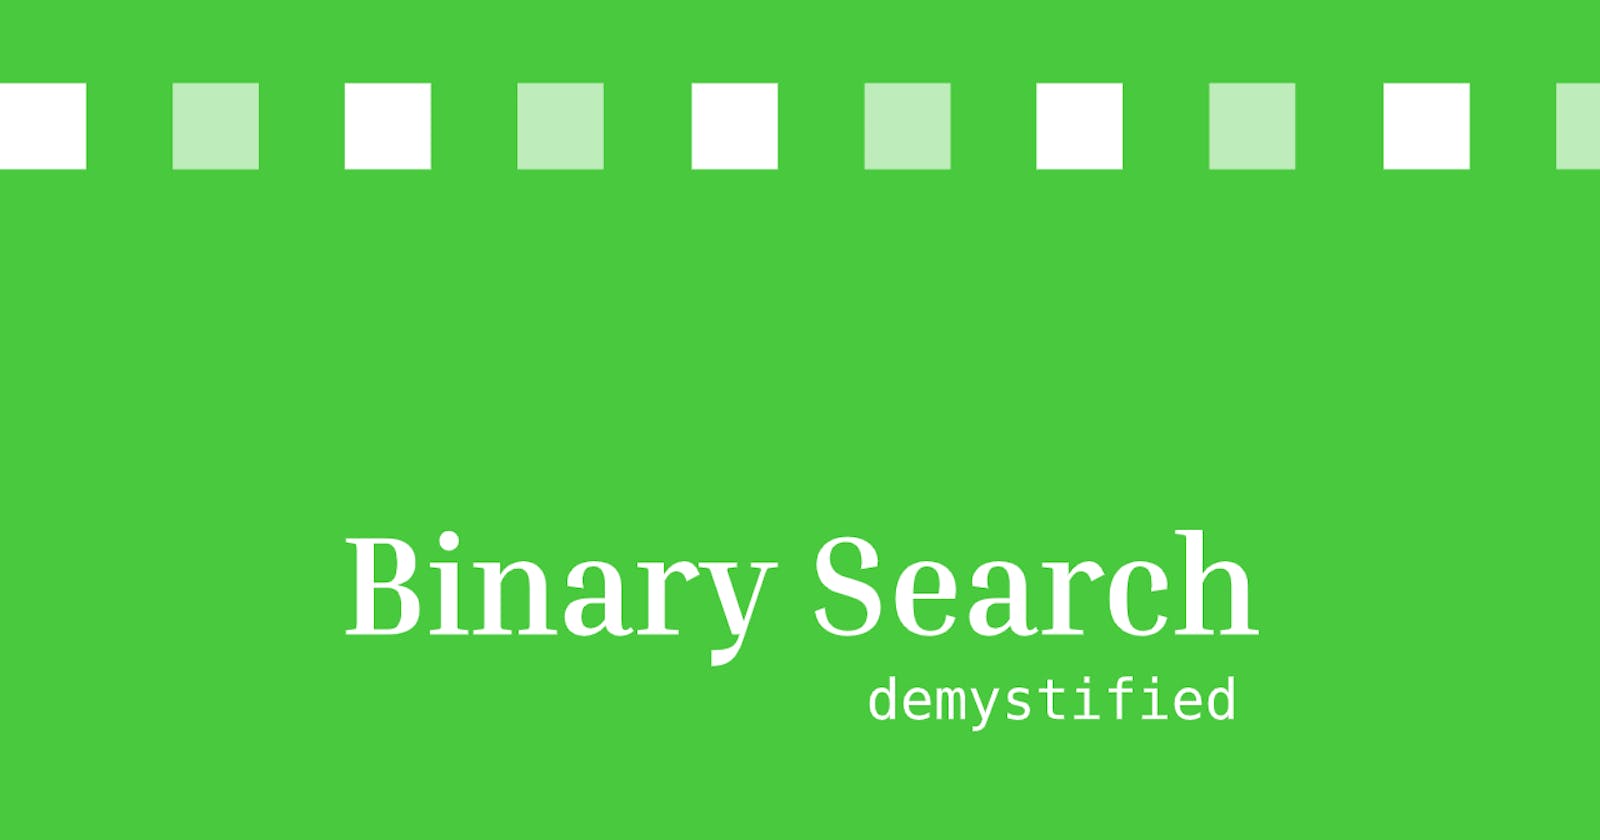 Binary search demystified